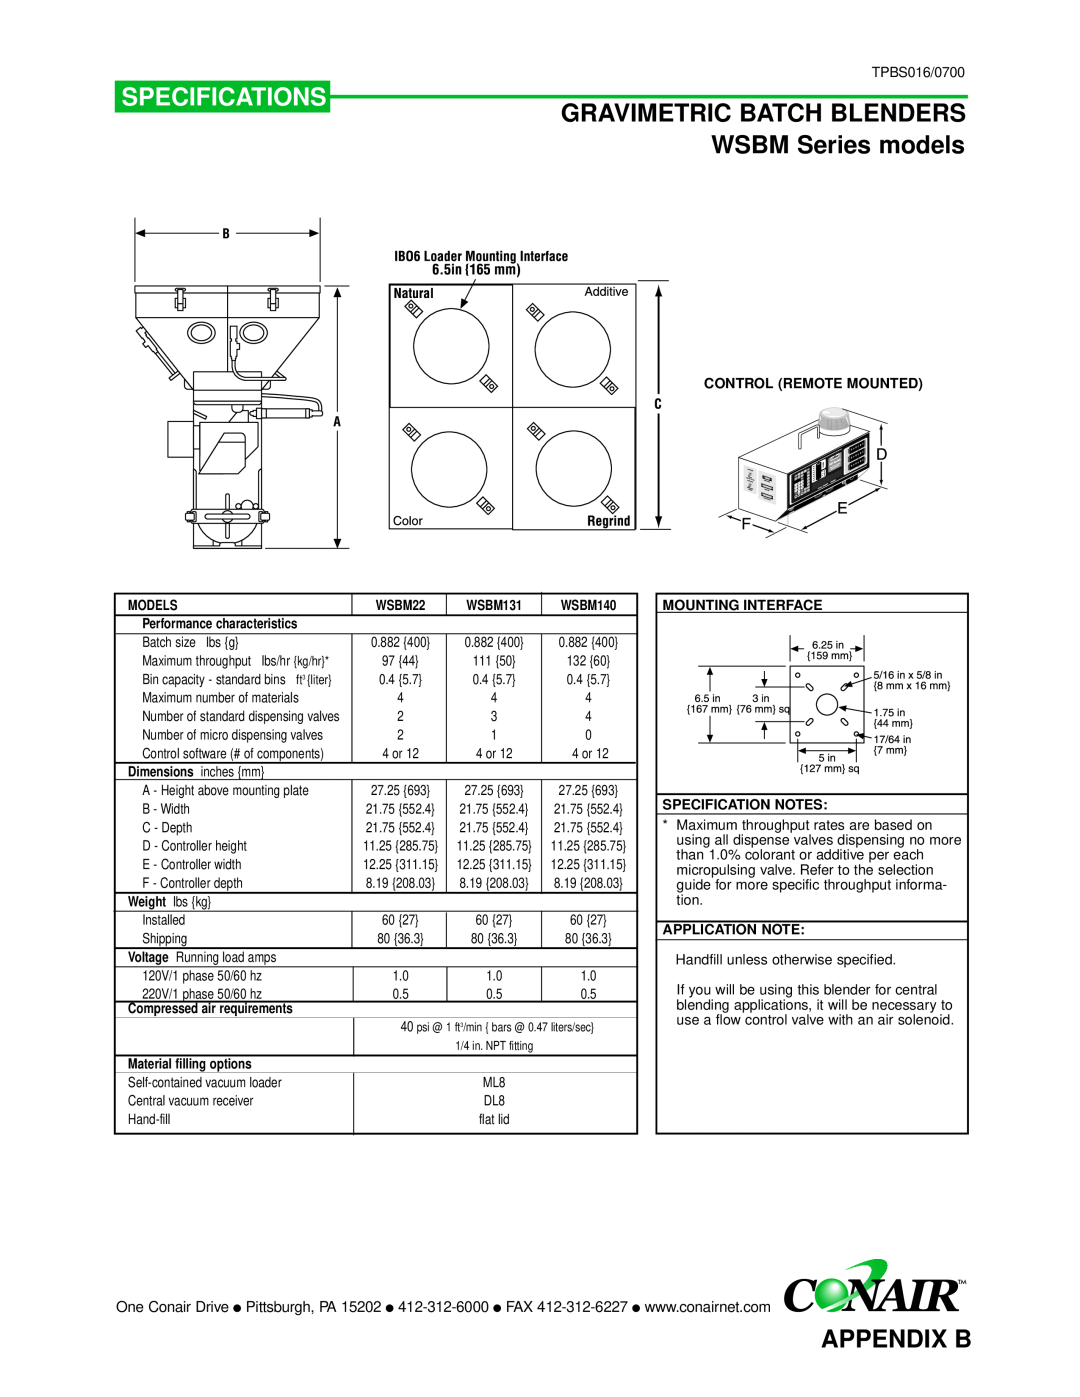 Conair GB/ WSB manual GRAVIMETRIC BATCH BLENDERS WSBM Series models, Specifications, Appendix B 